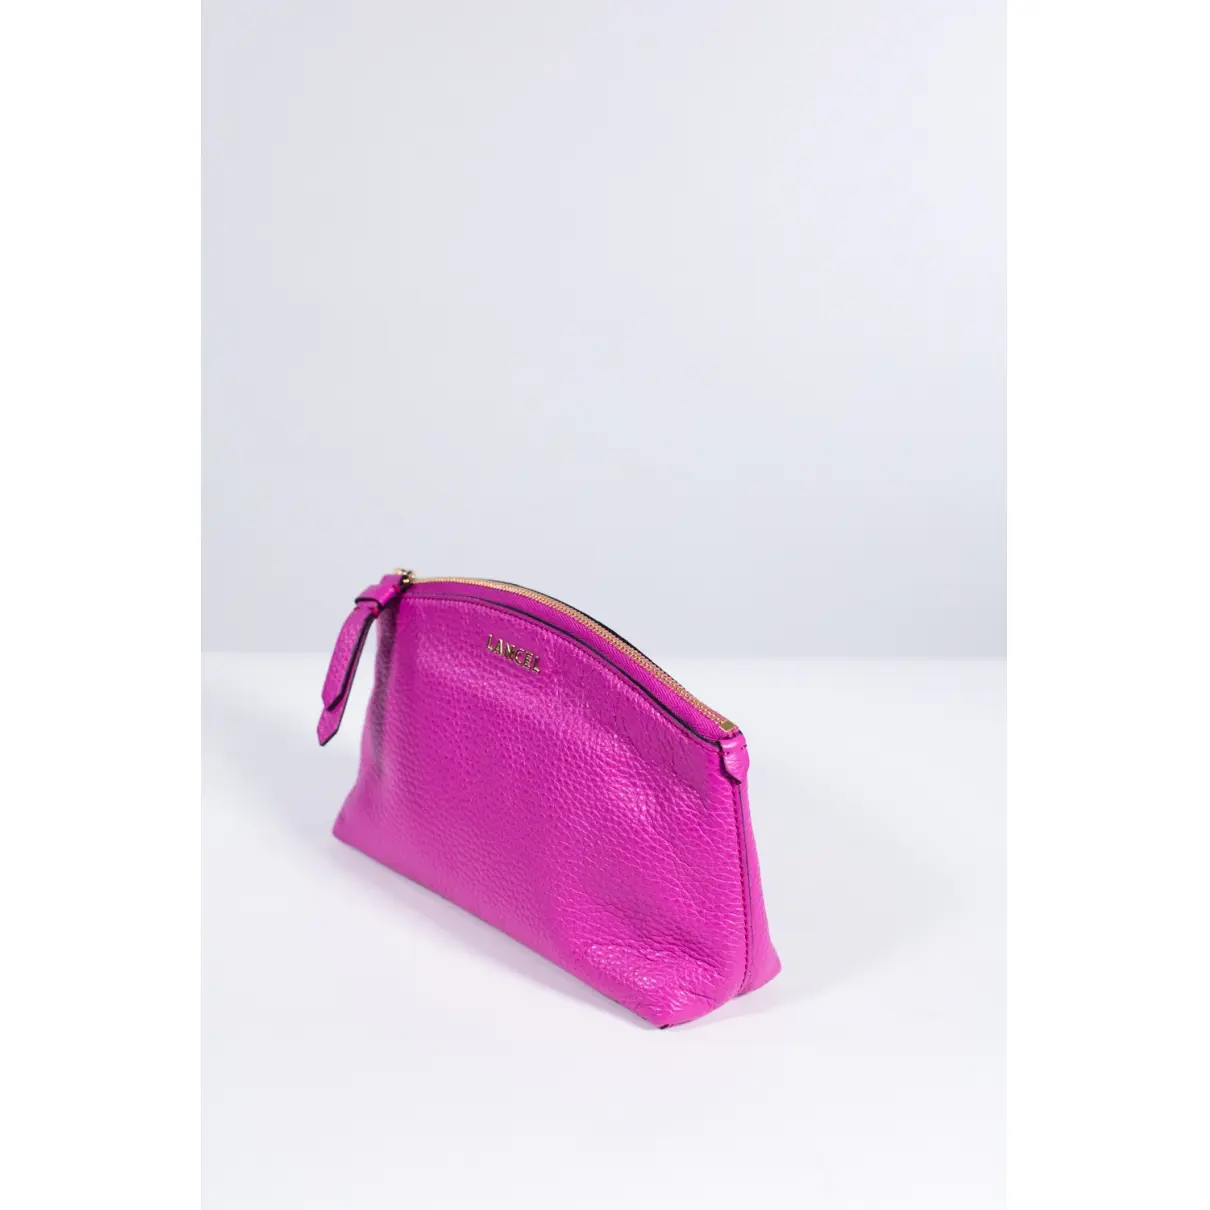 Buy Lancel Lettrines leather purse online